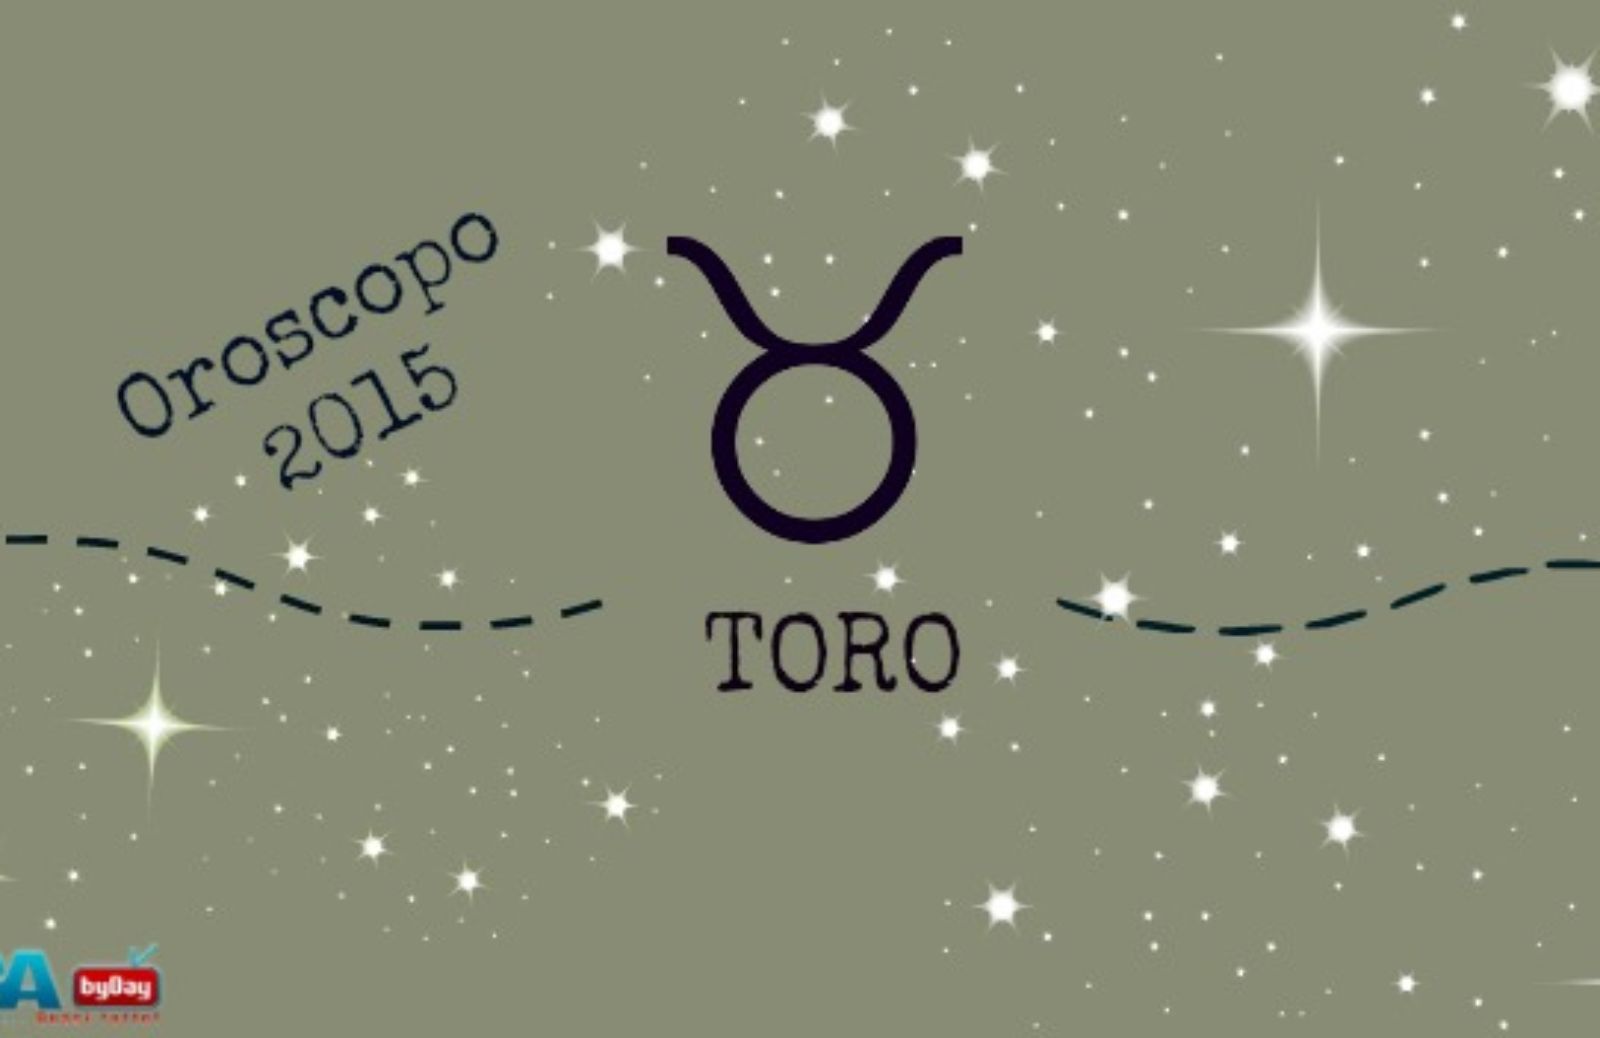 Oroscopo 2015: Toro